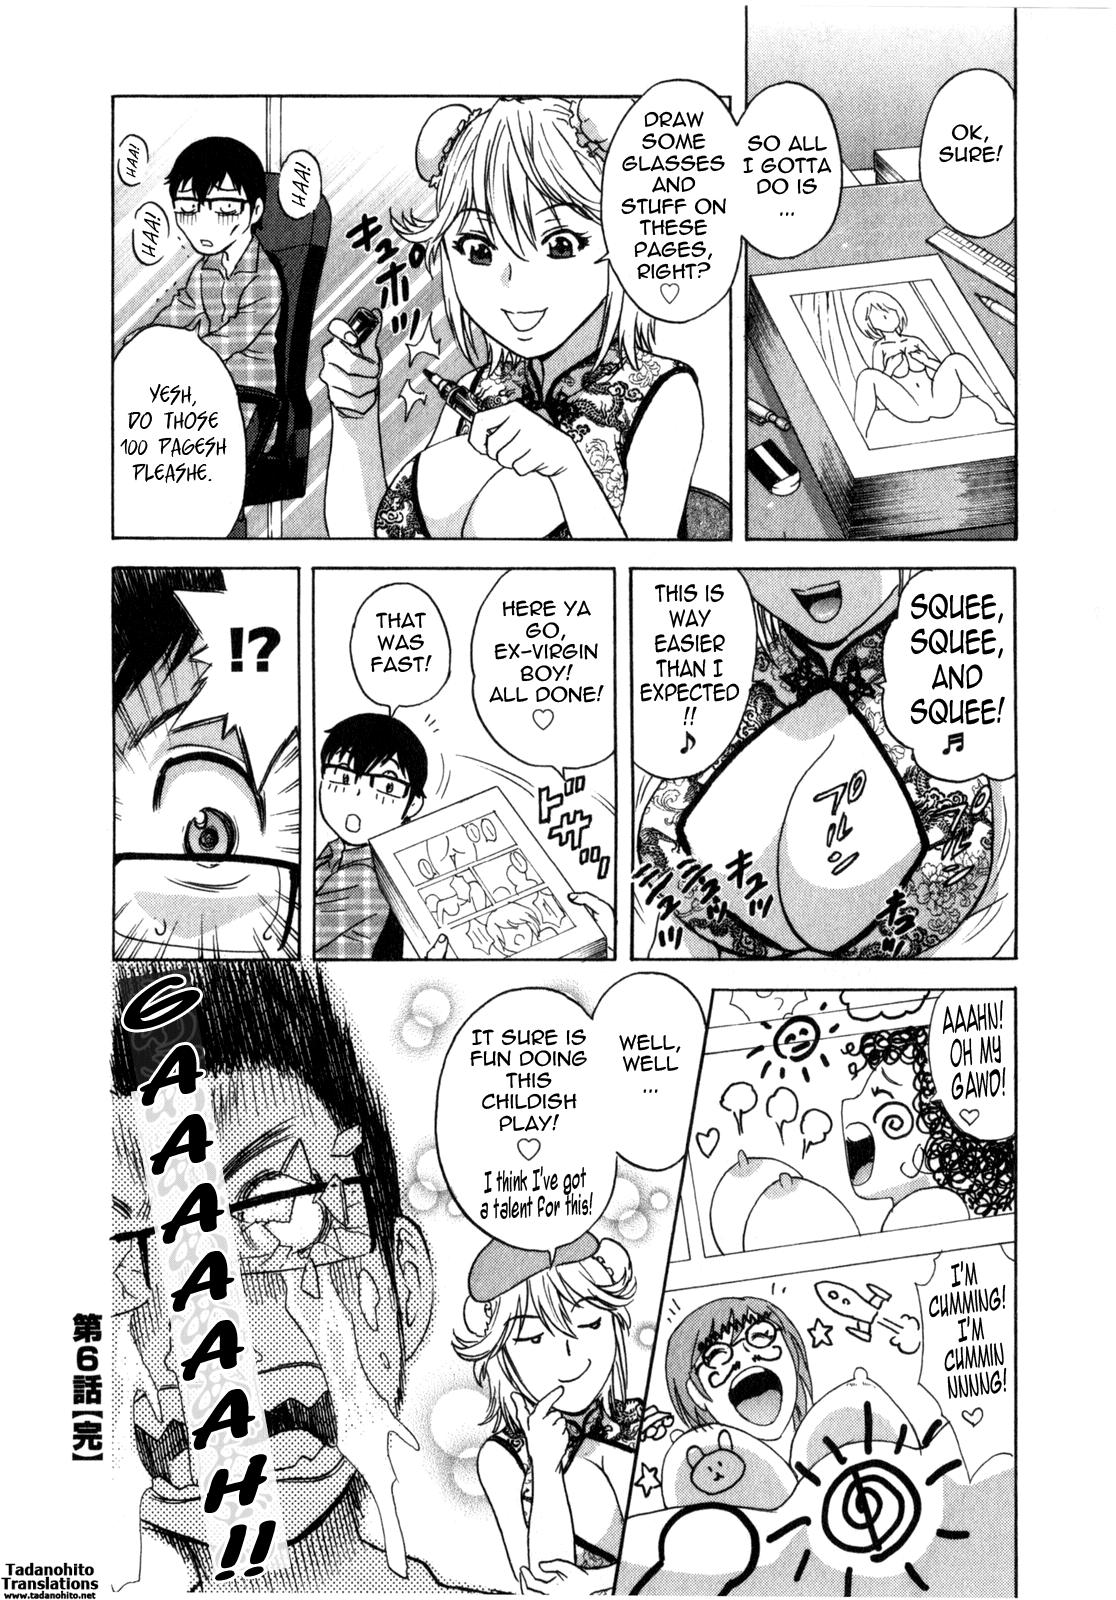 [Hidemaru] Life with Married Women Just Like a Manga 3 - Ch. 1-8 [English] {Tadanohito} 125